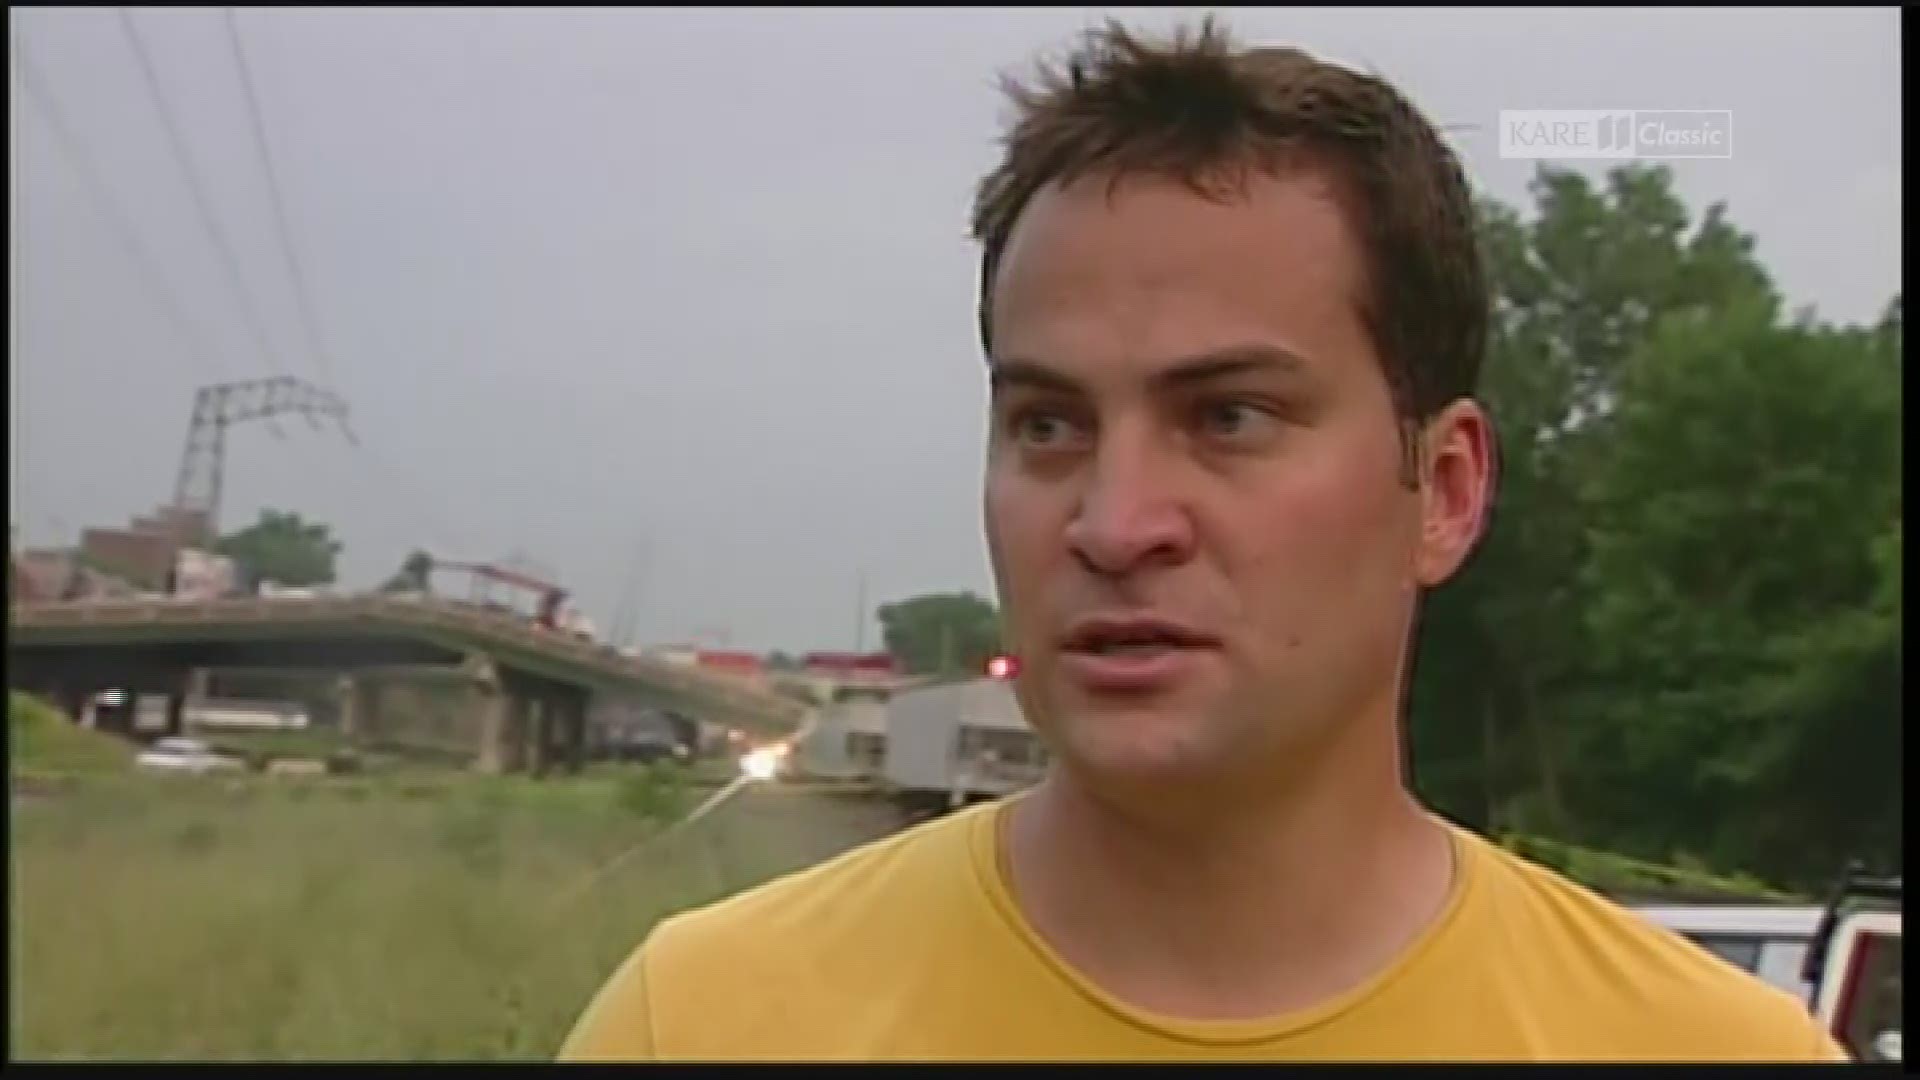 KARE 11's Greg Vandegrift talks with people who witnessed the devastation on Aug. 1, 2007.